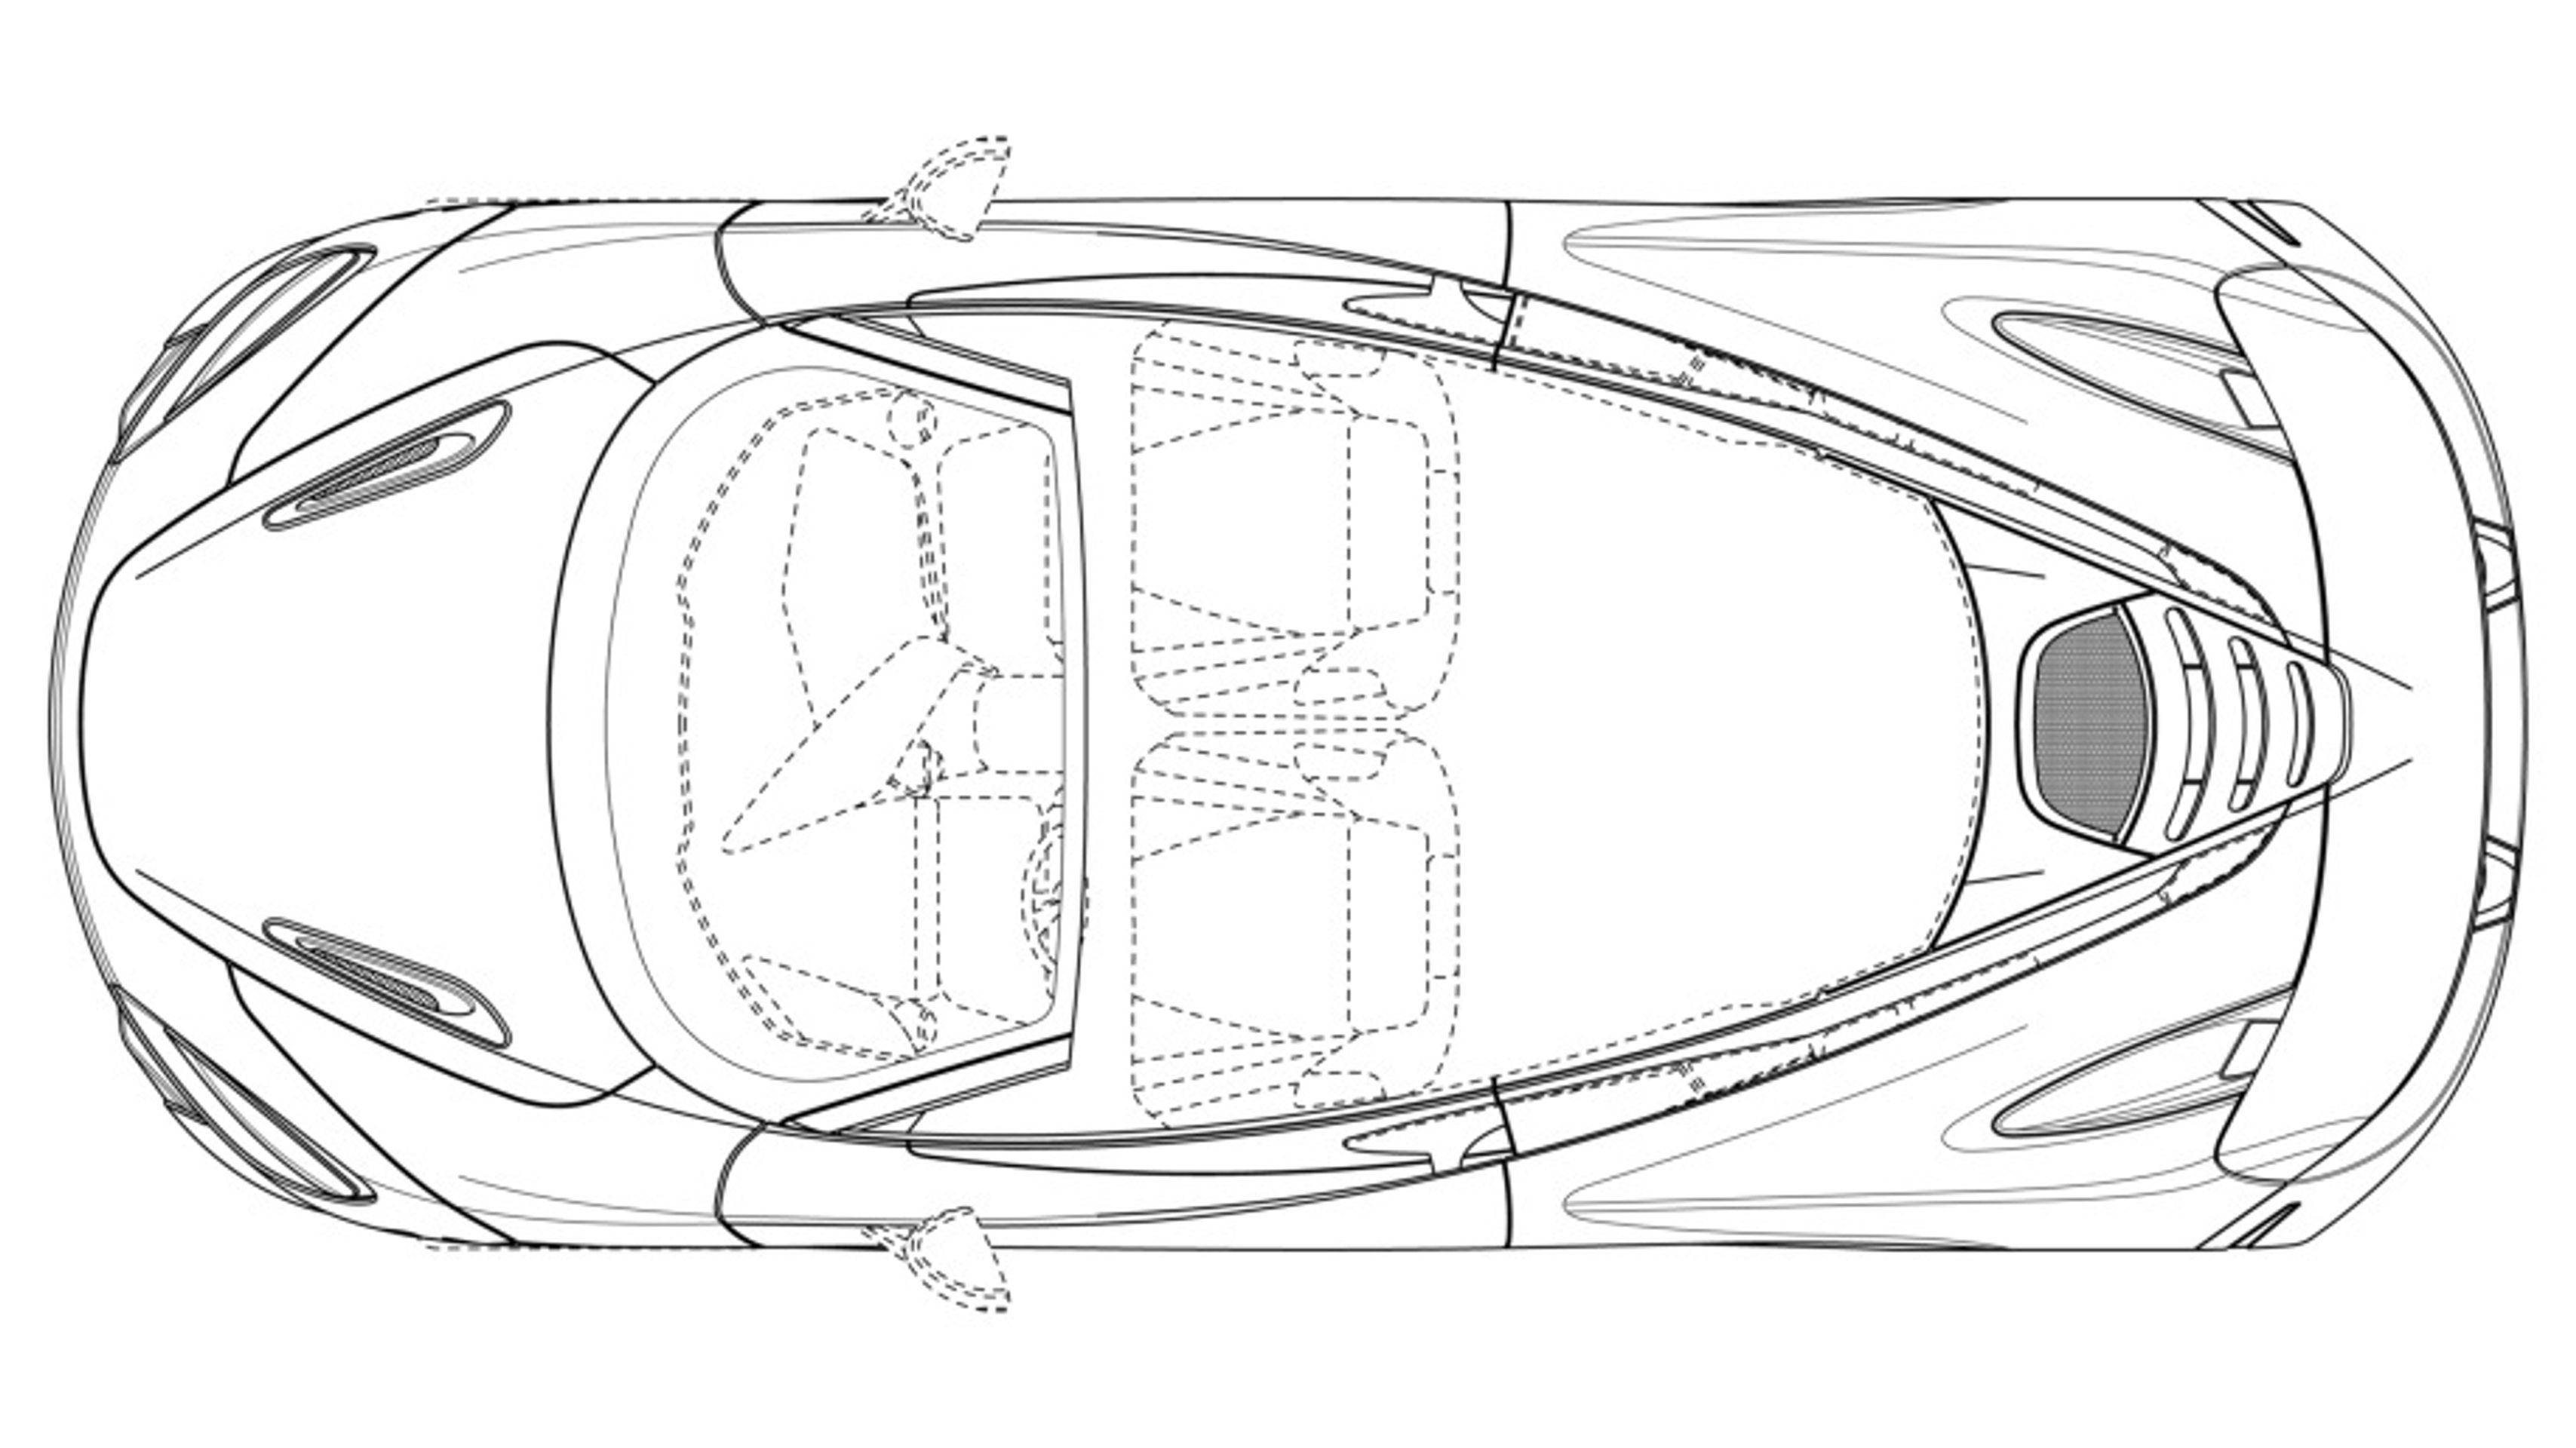 Nový McLaren 720S Spider - 16 - Fotogalerie: Vyjede McLaren 720S bez střechy? (6/8)